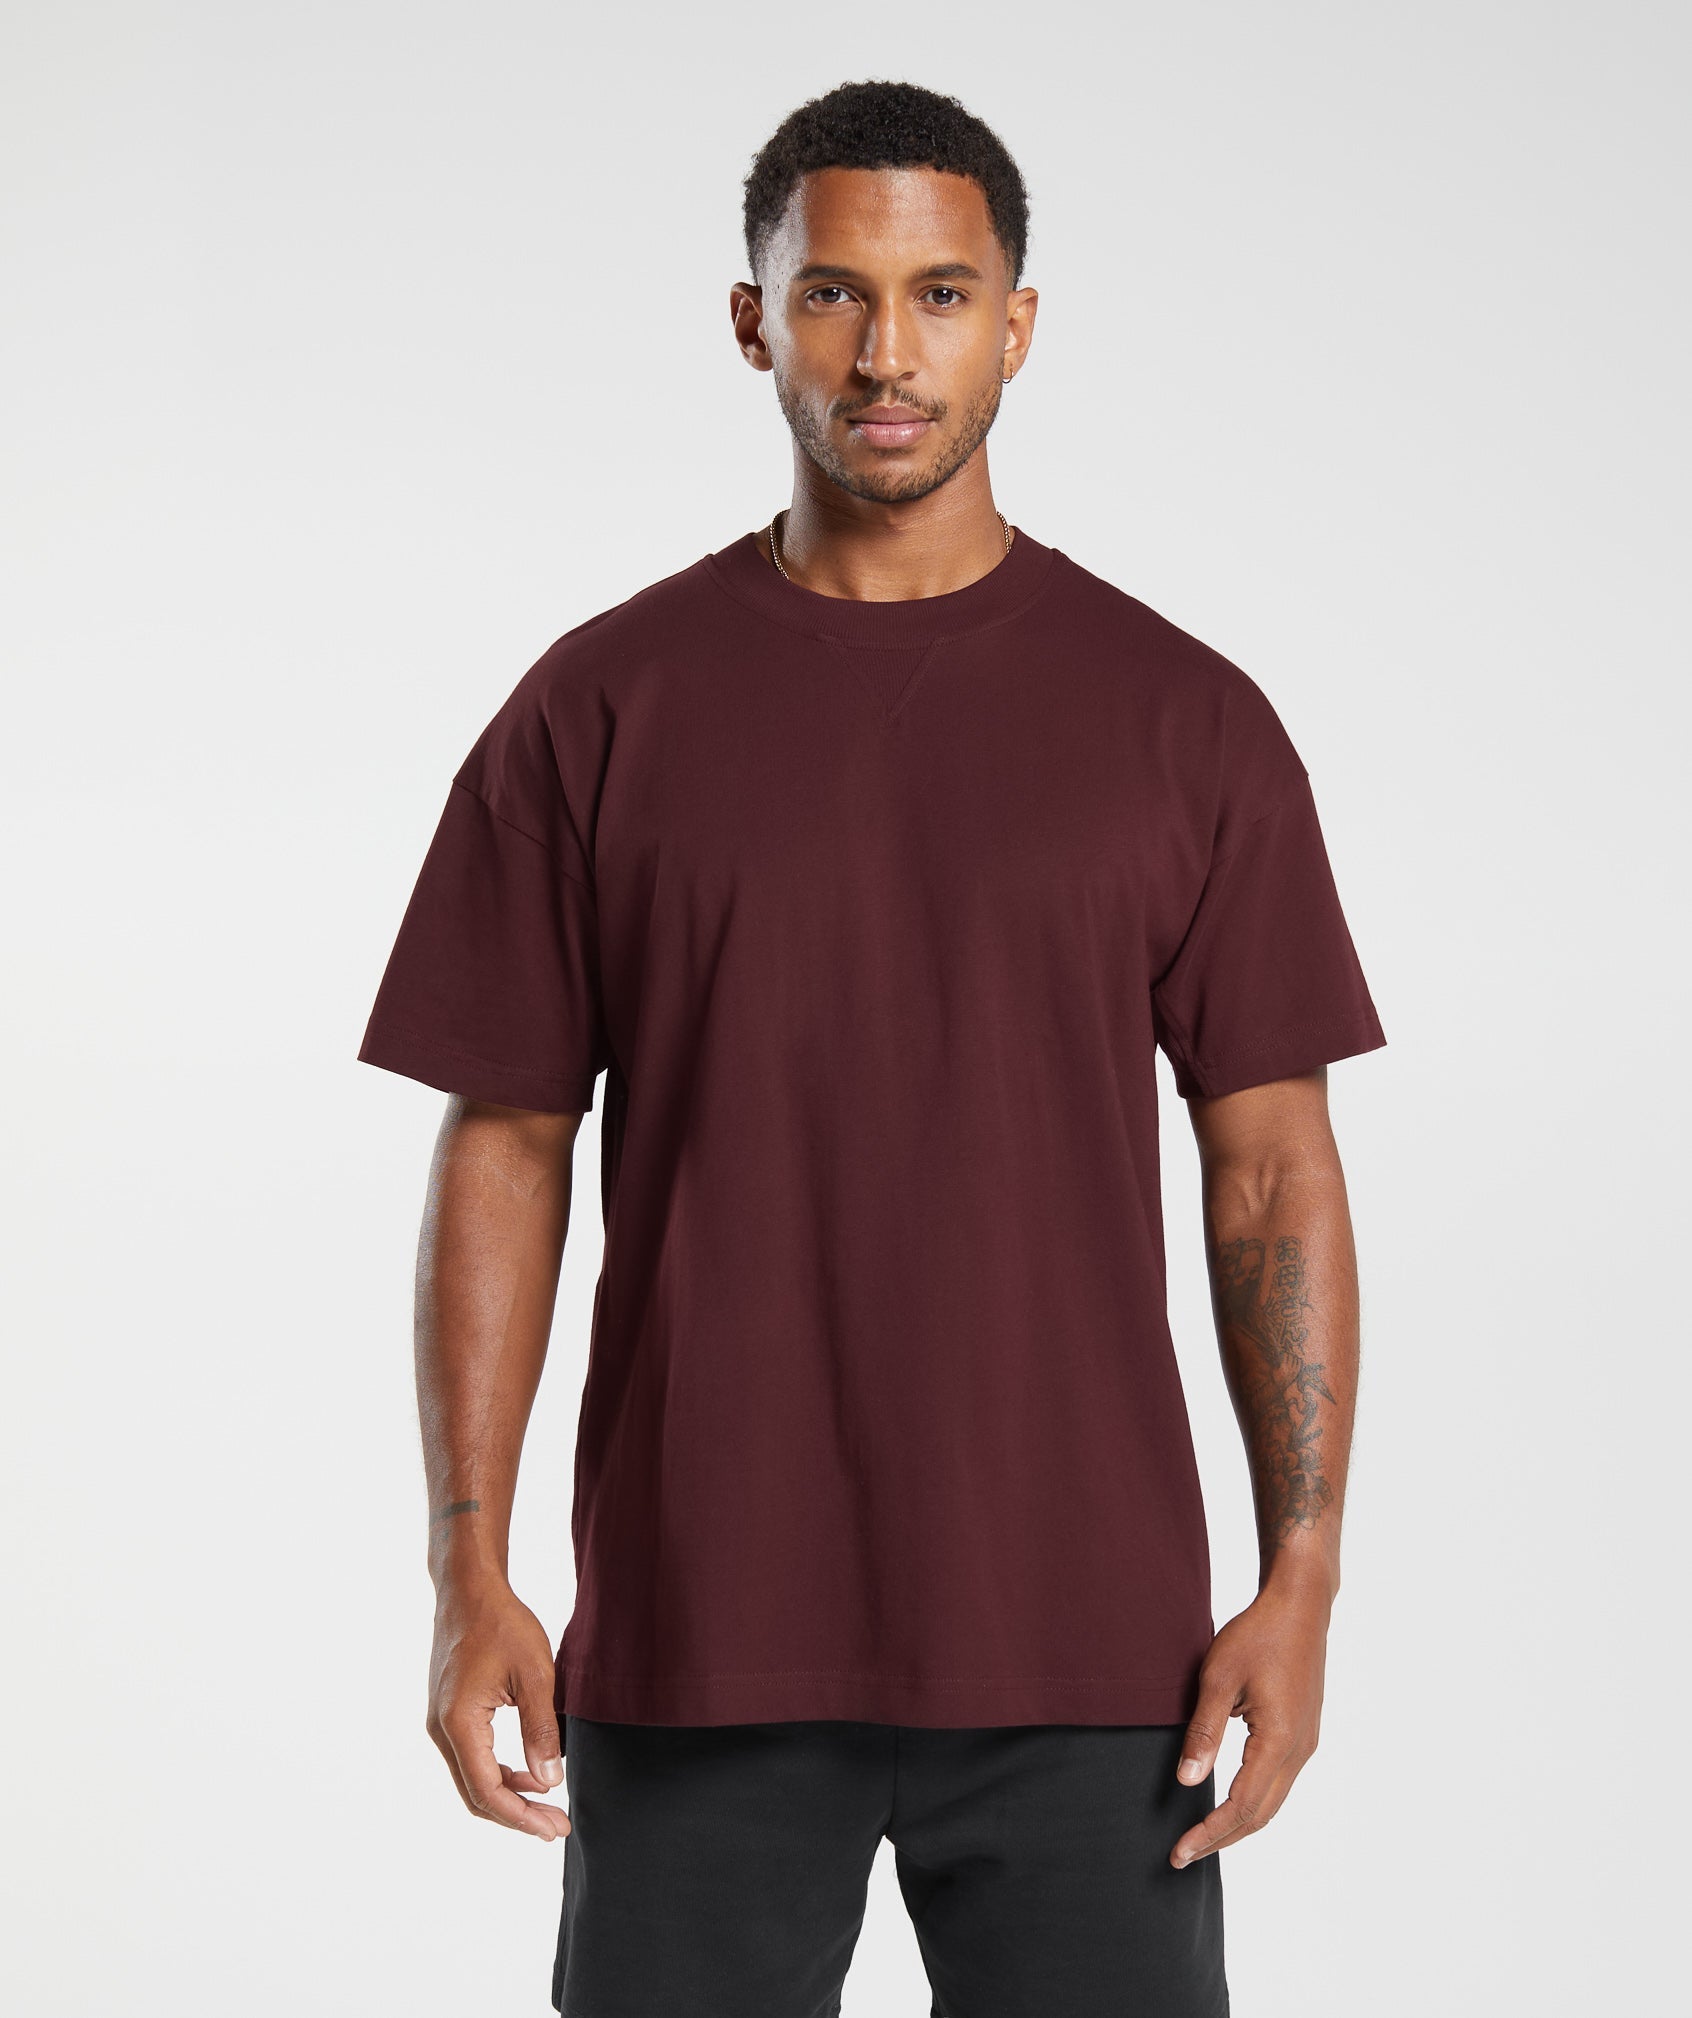 Men's Oversized T Shirts & Baggy T Shirts - Gymshark